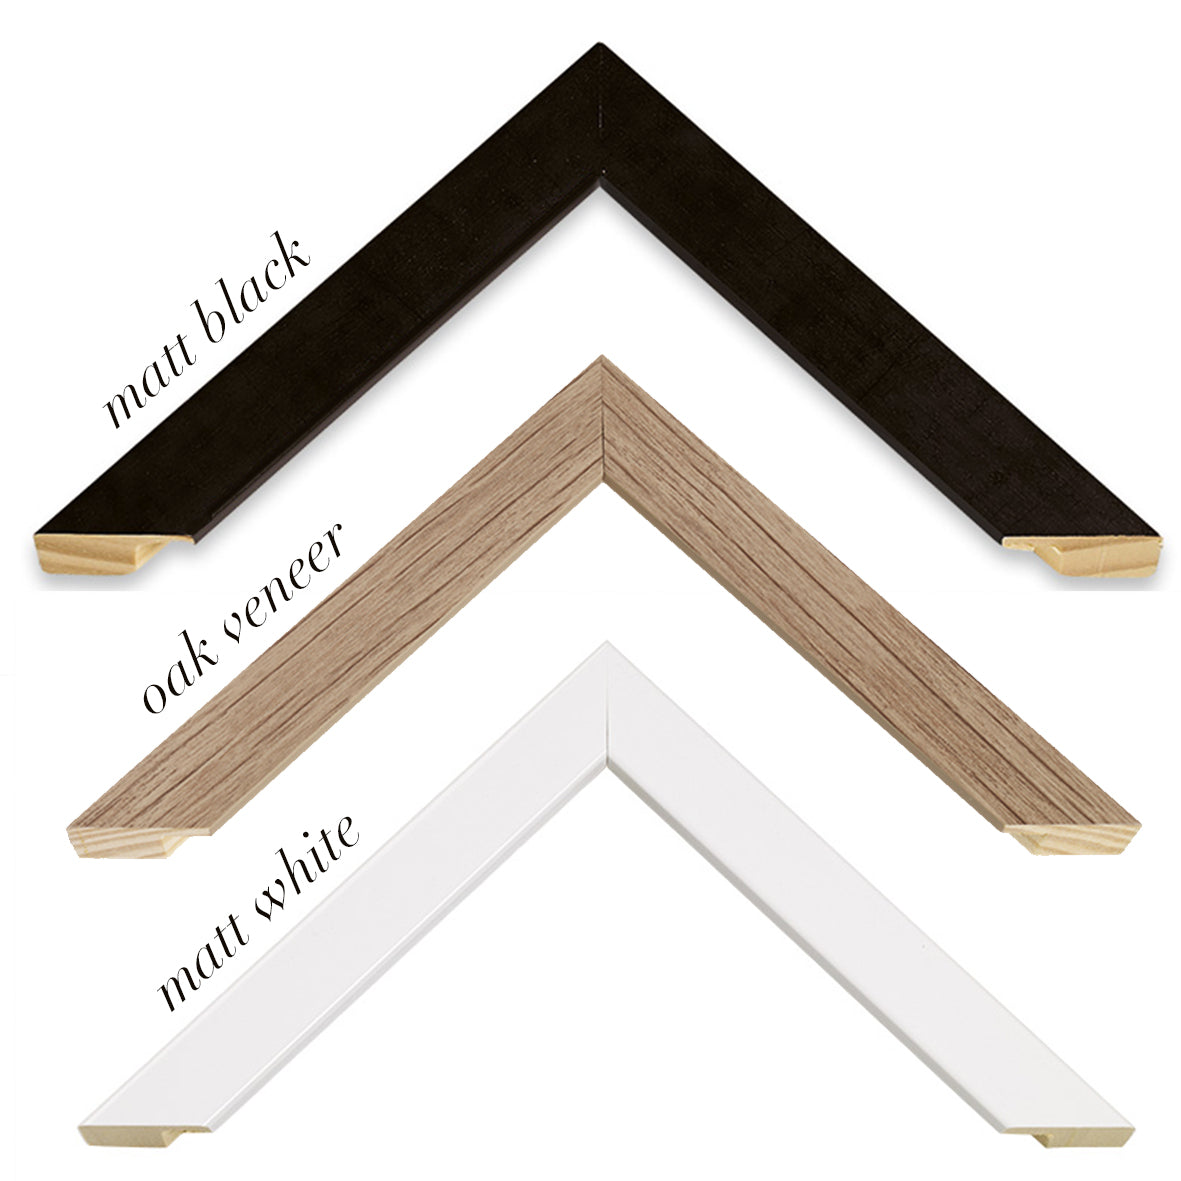 matt white, matt black and oak veneer frames close up